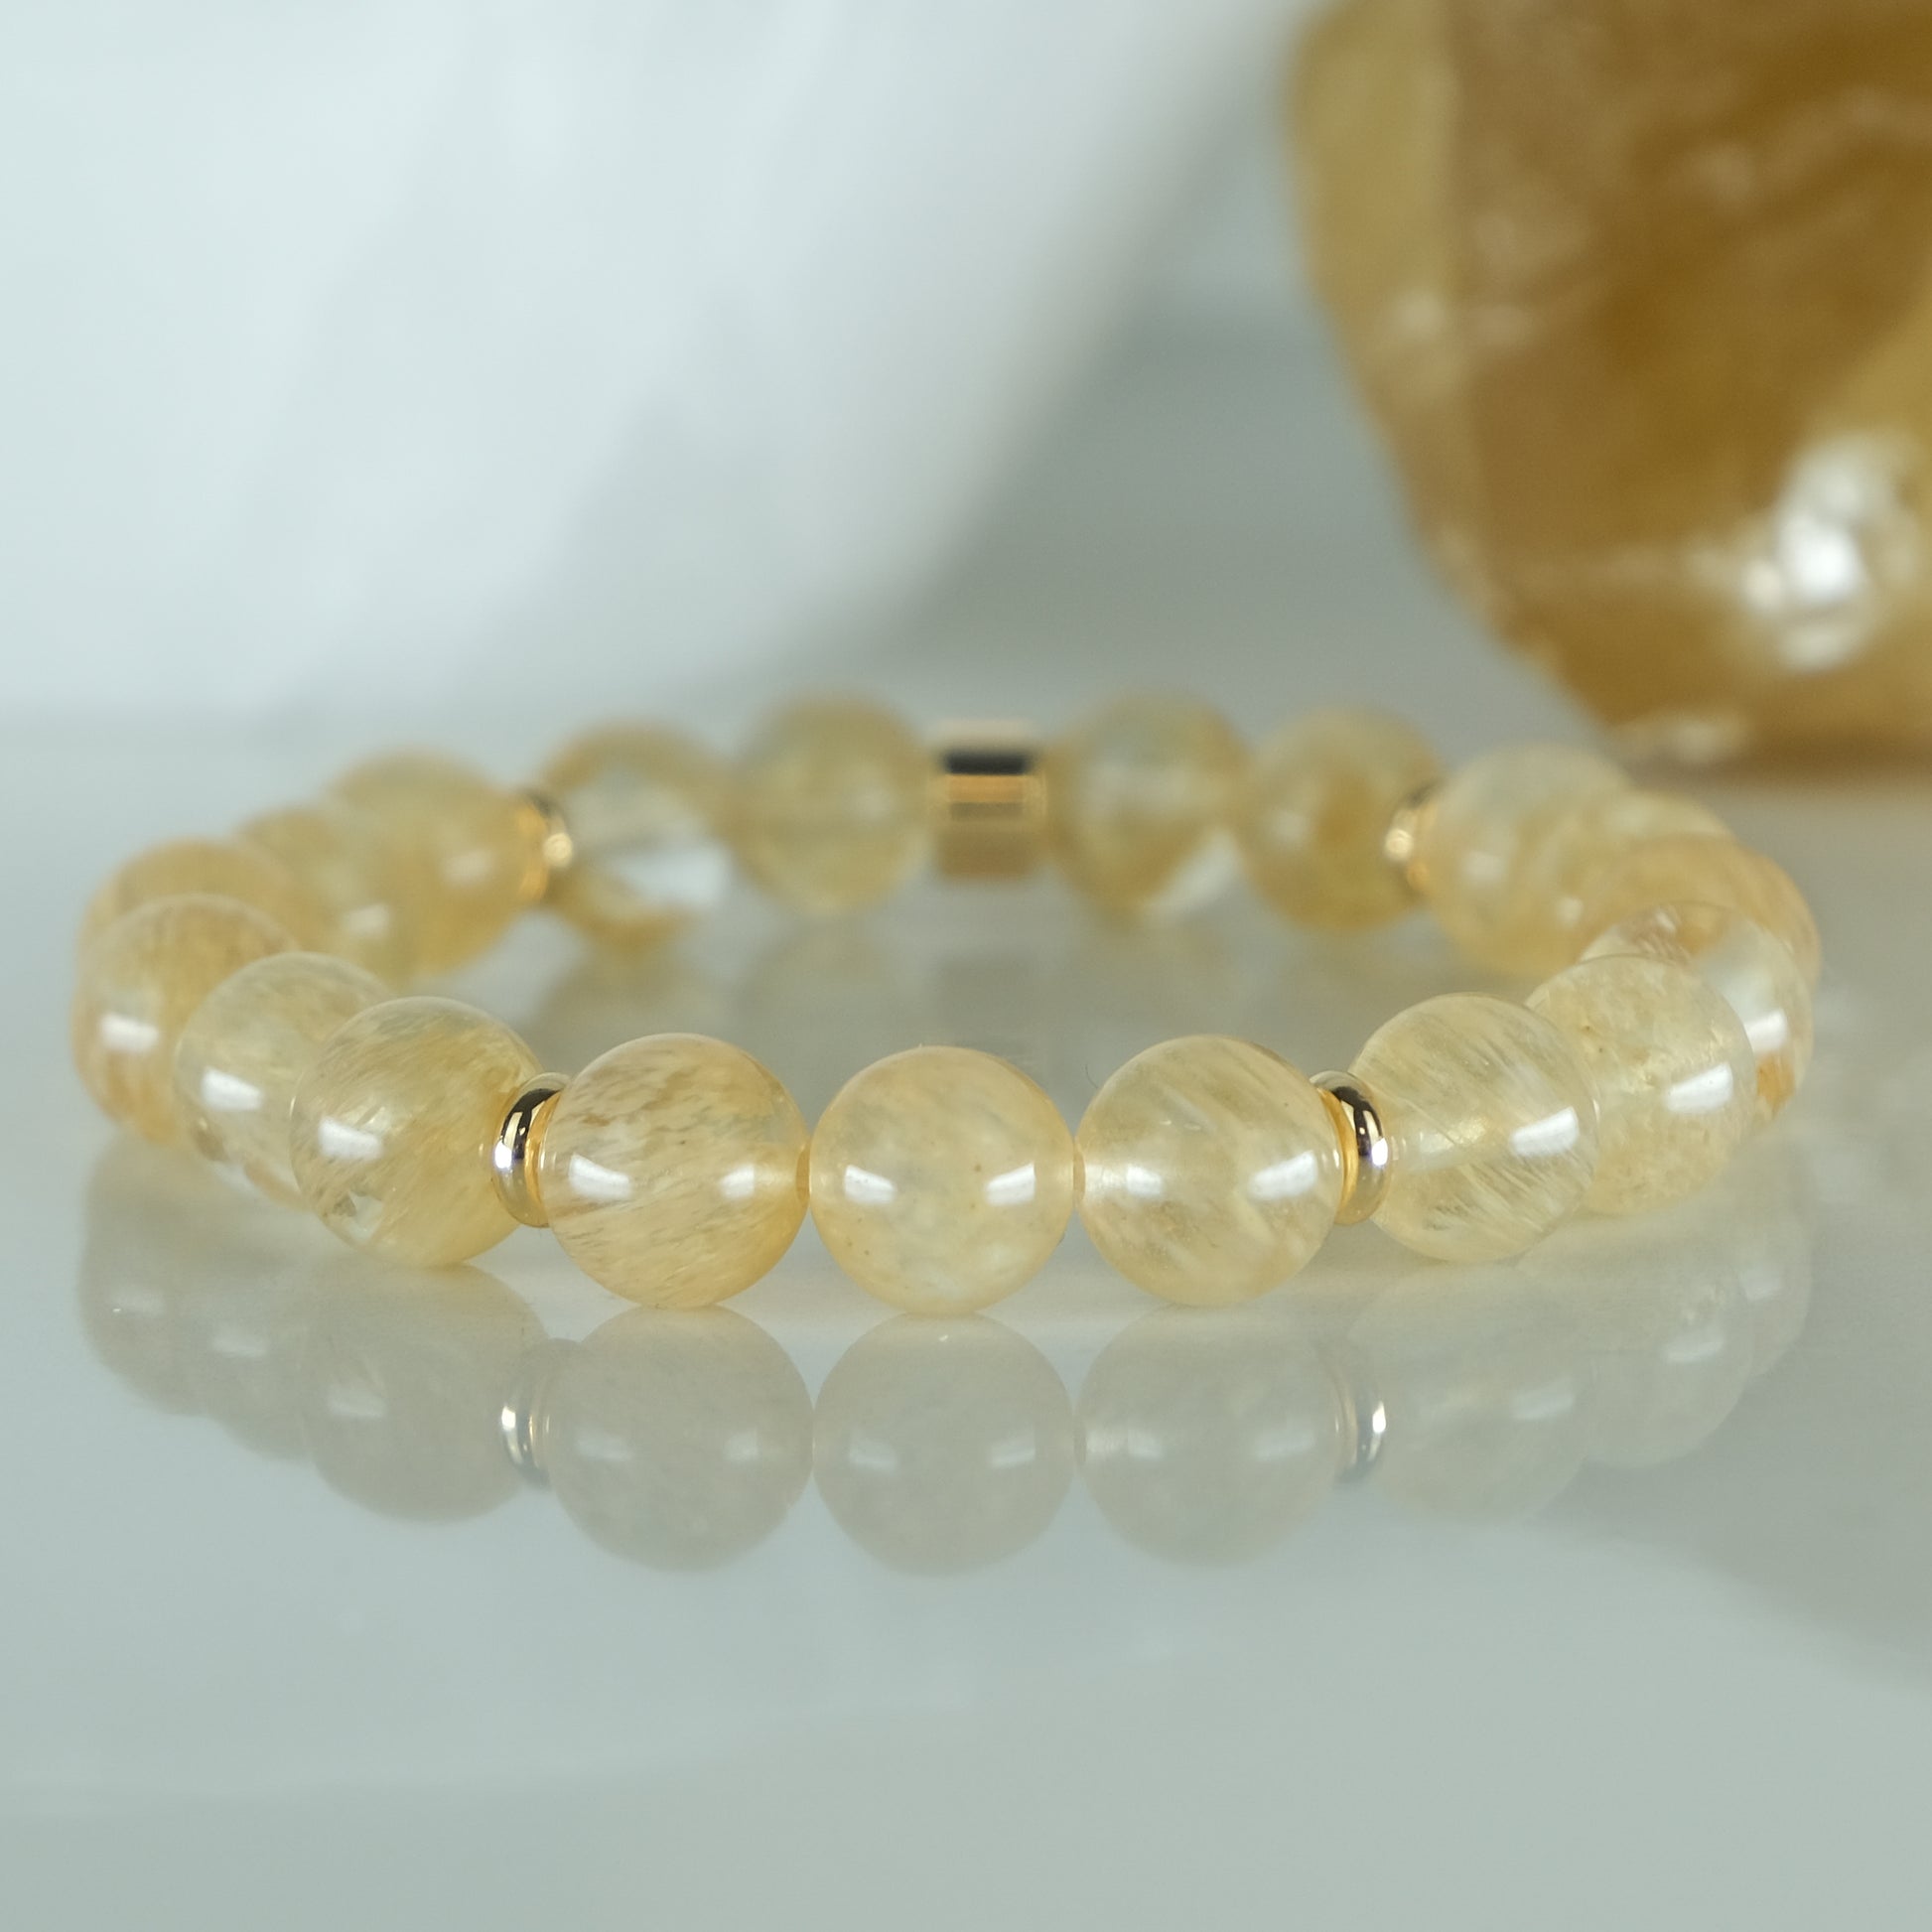 8mm golden healer quartz gemstone bracelet with gold plated accents